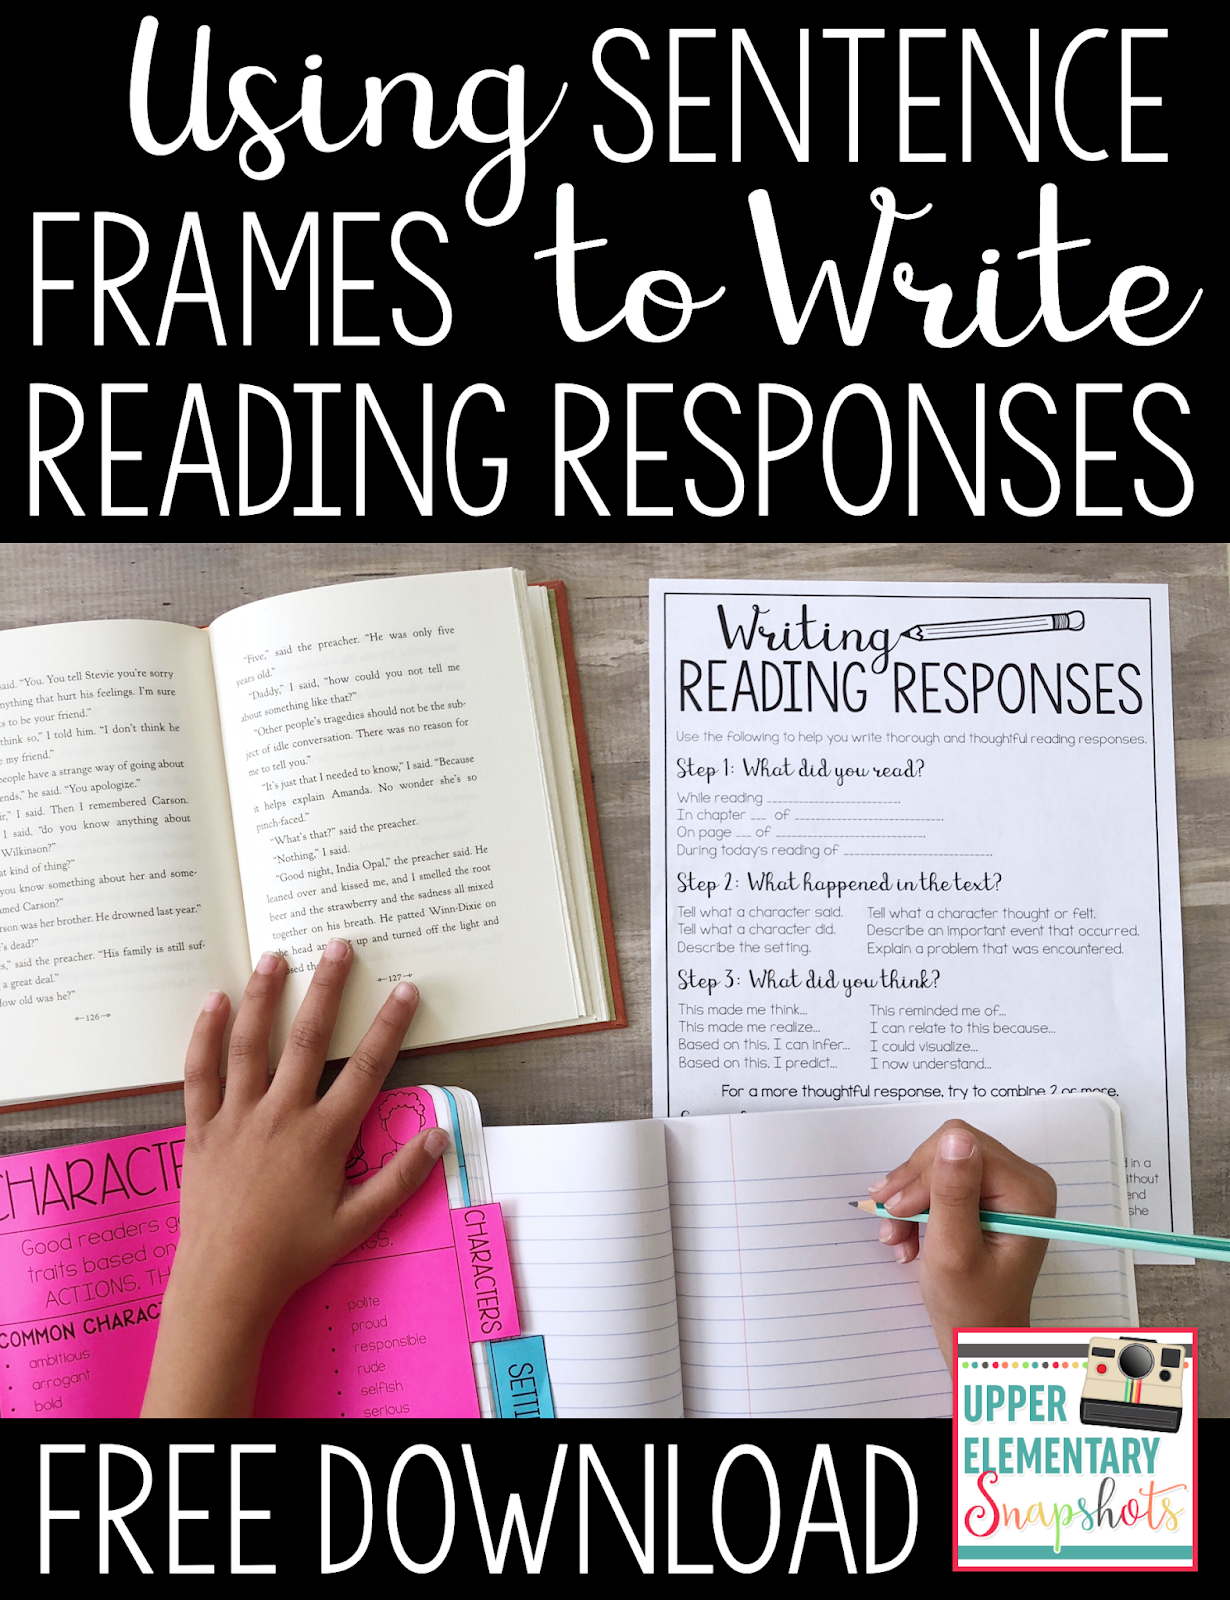 using-sentence-frames-to-write-reading-responses-upper-elementary-snapshots